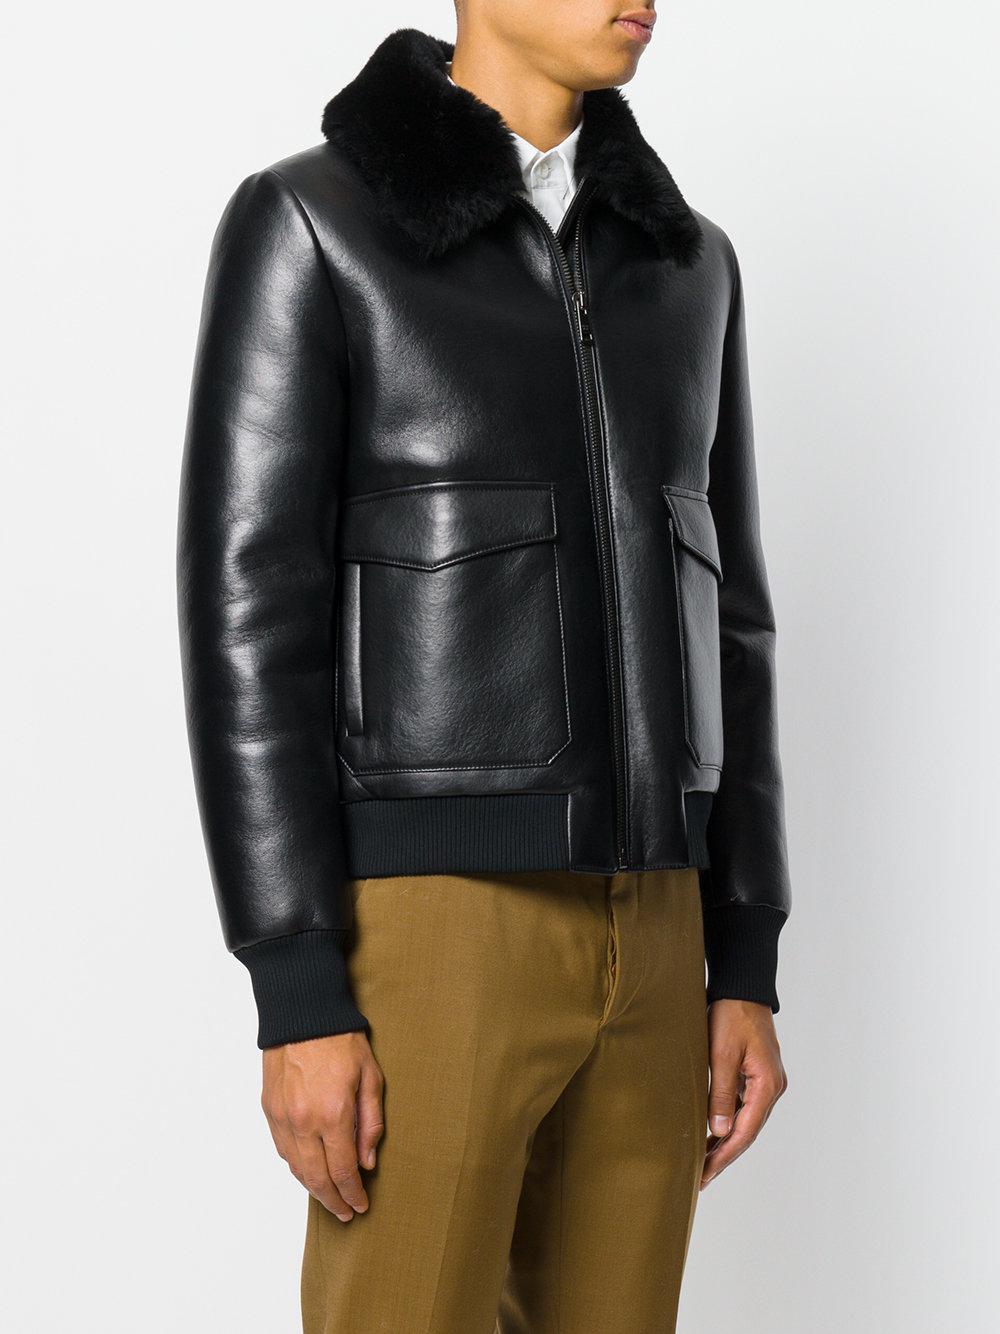 Prada Leather Shearling Collar Bomber Jacket in Black for Men - Lyst